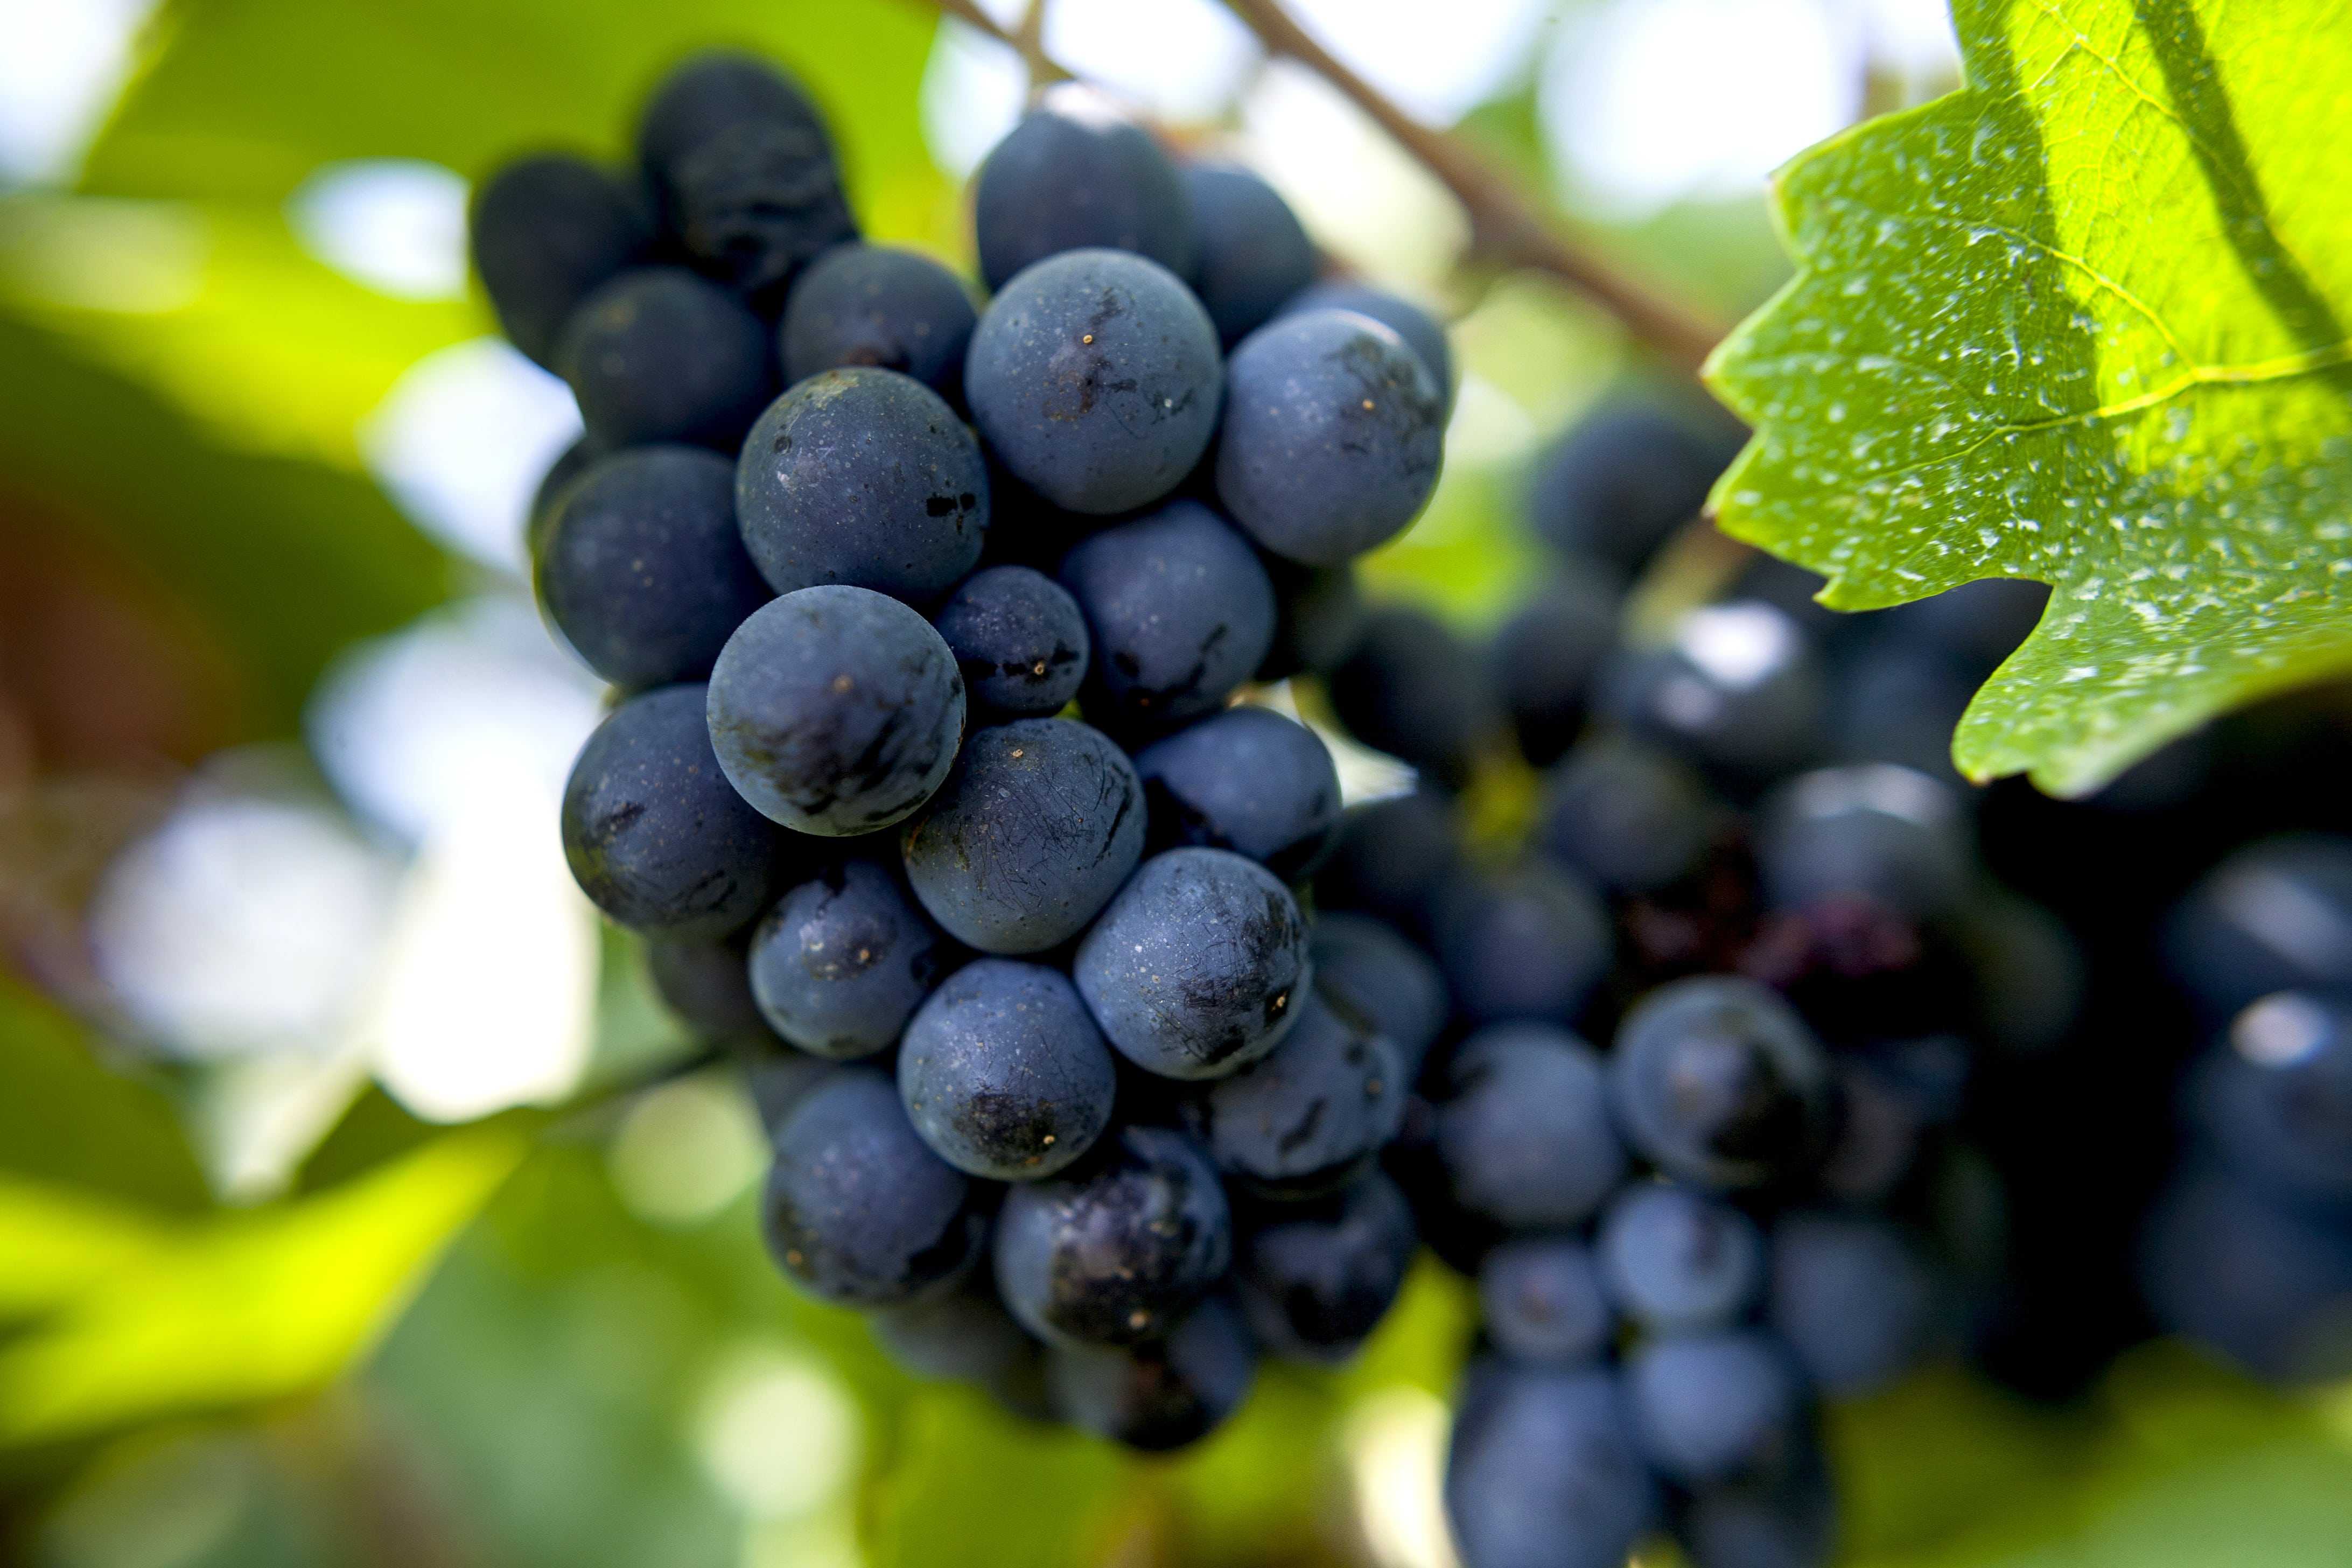 Пино нуар (pinot noir) -  сорт винограда